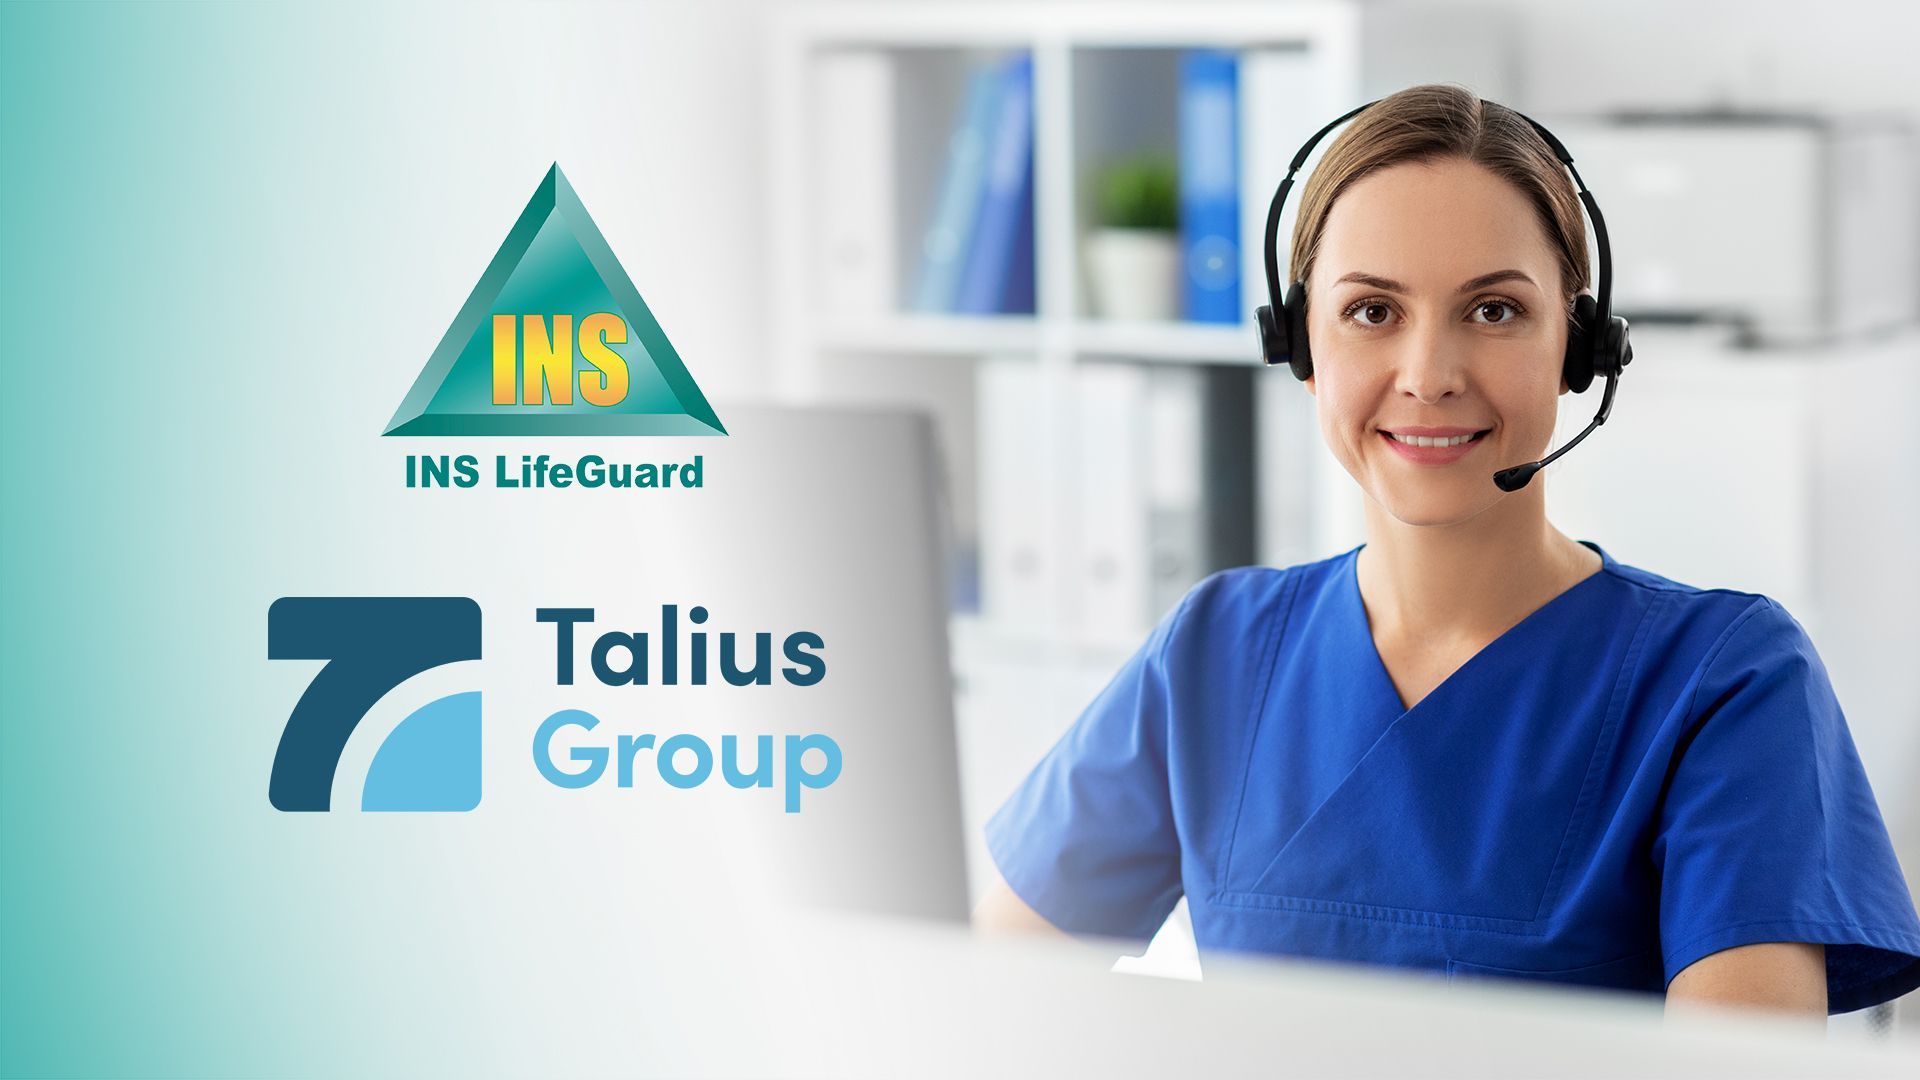 INS LifeGuard and Talius Group